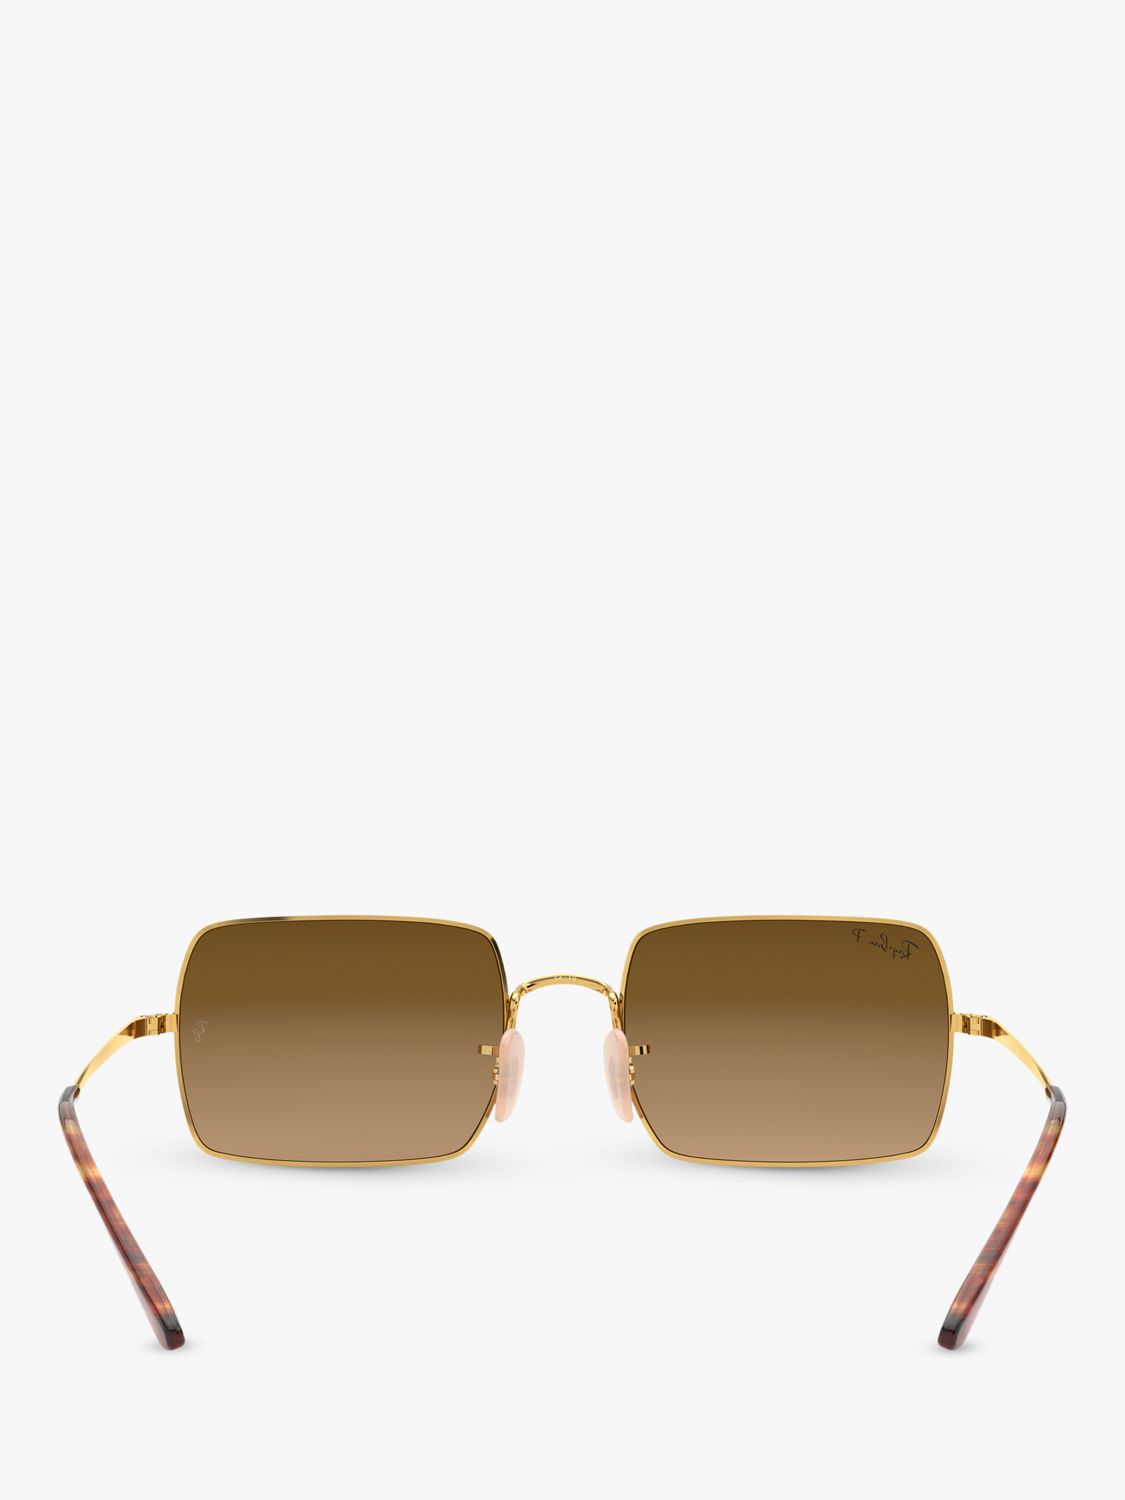 Ray-Ban RB1969 Unisex Polarised Rectangular Sunglasses, Gold/Brown Gradient